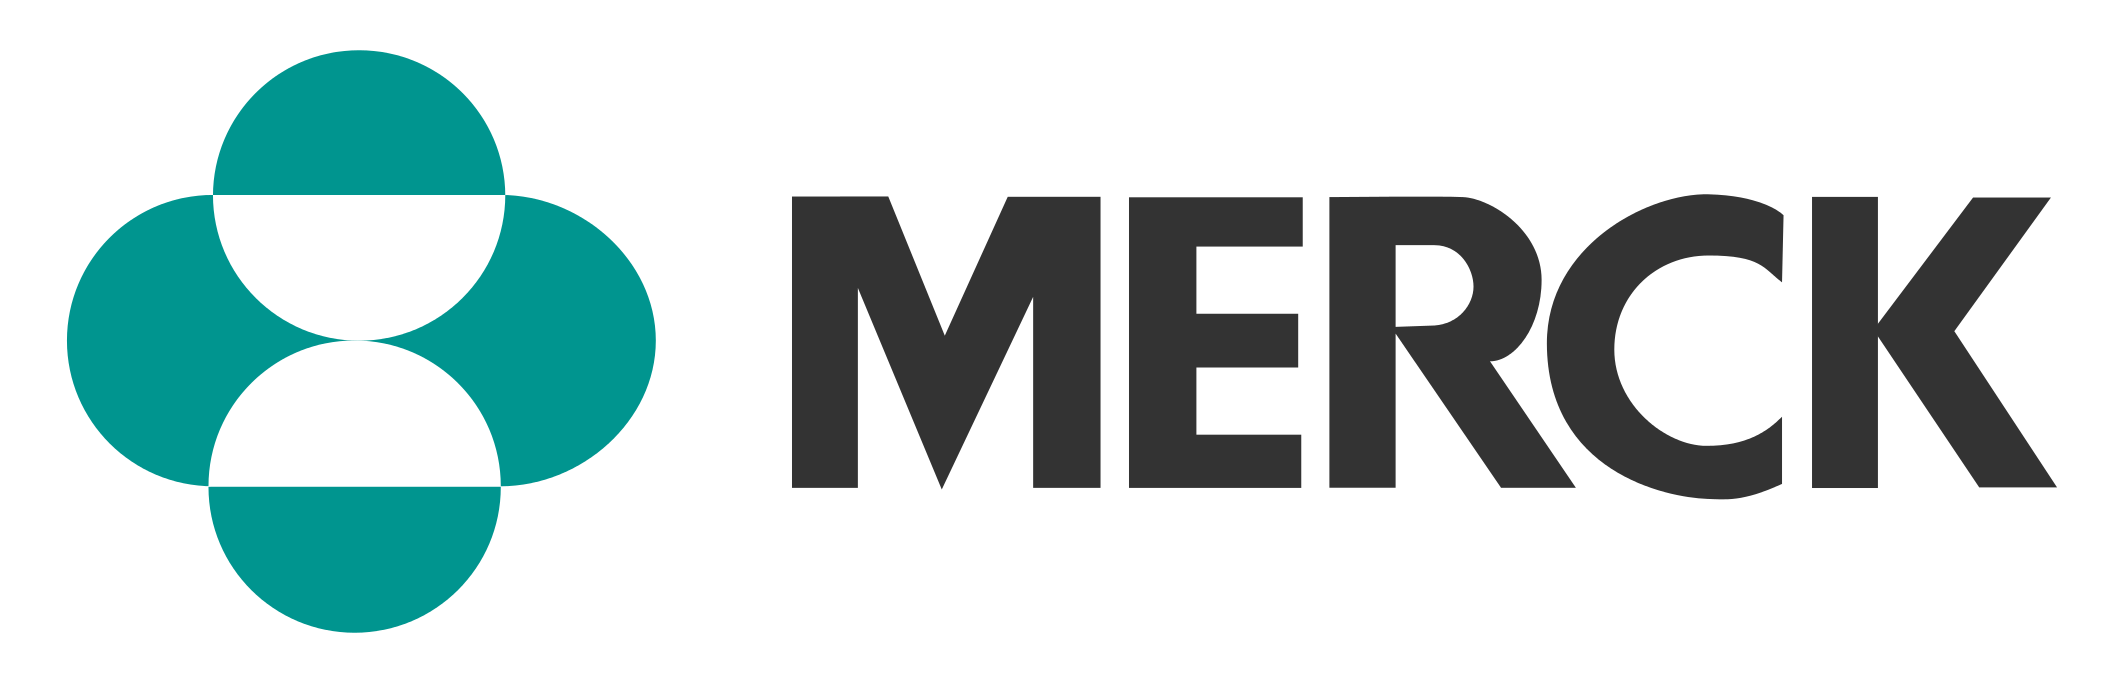 Merck logo on Living Rare site.